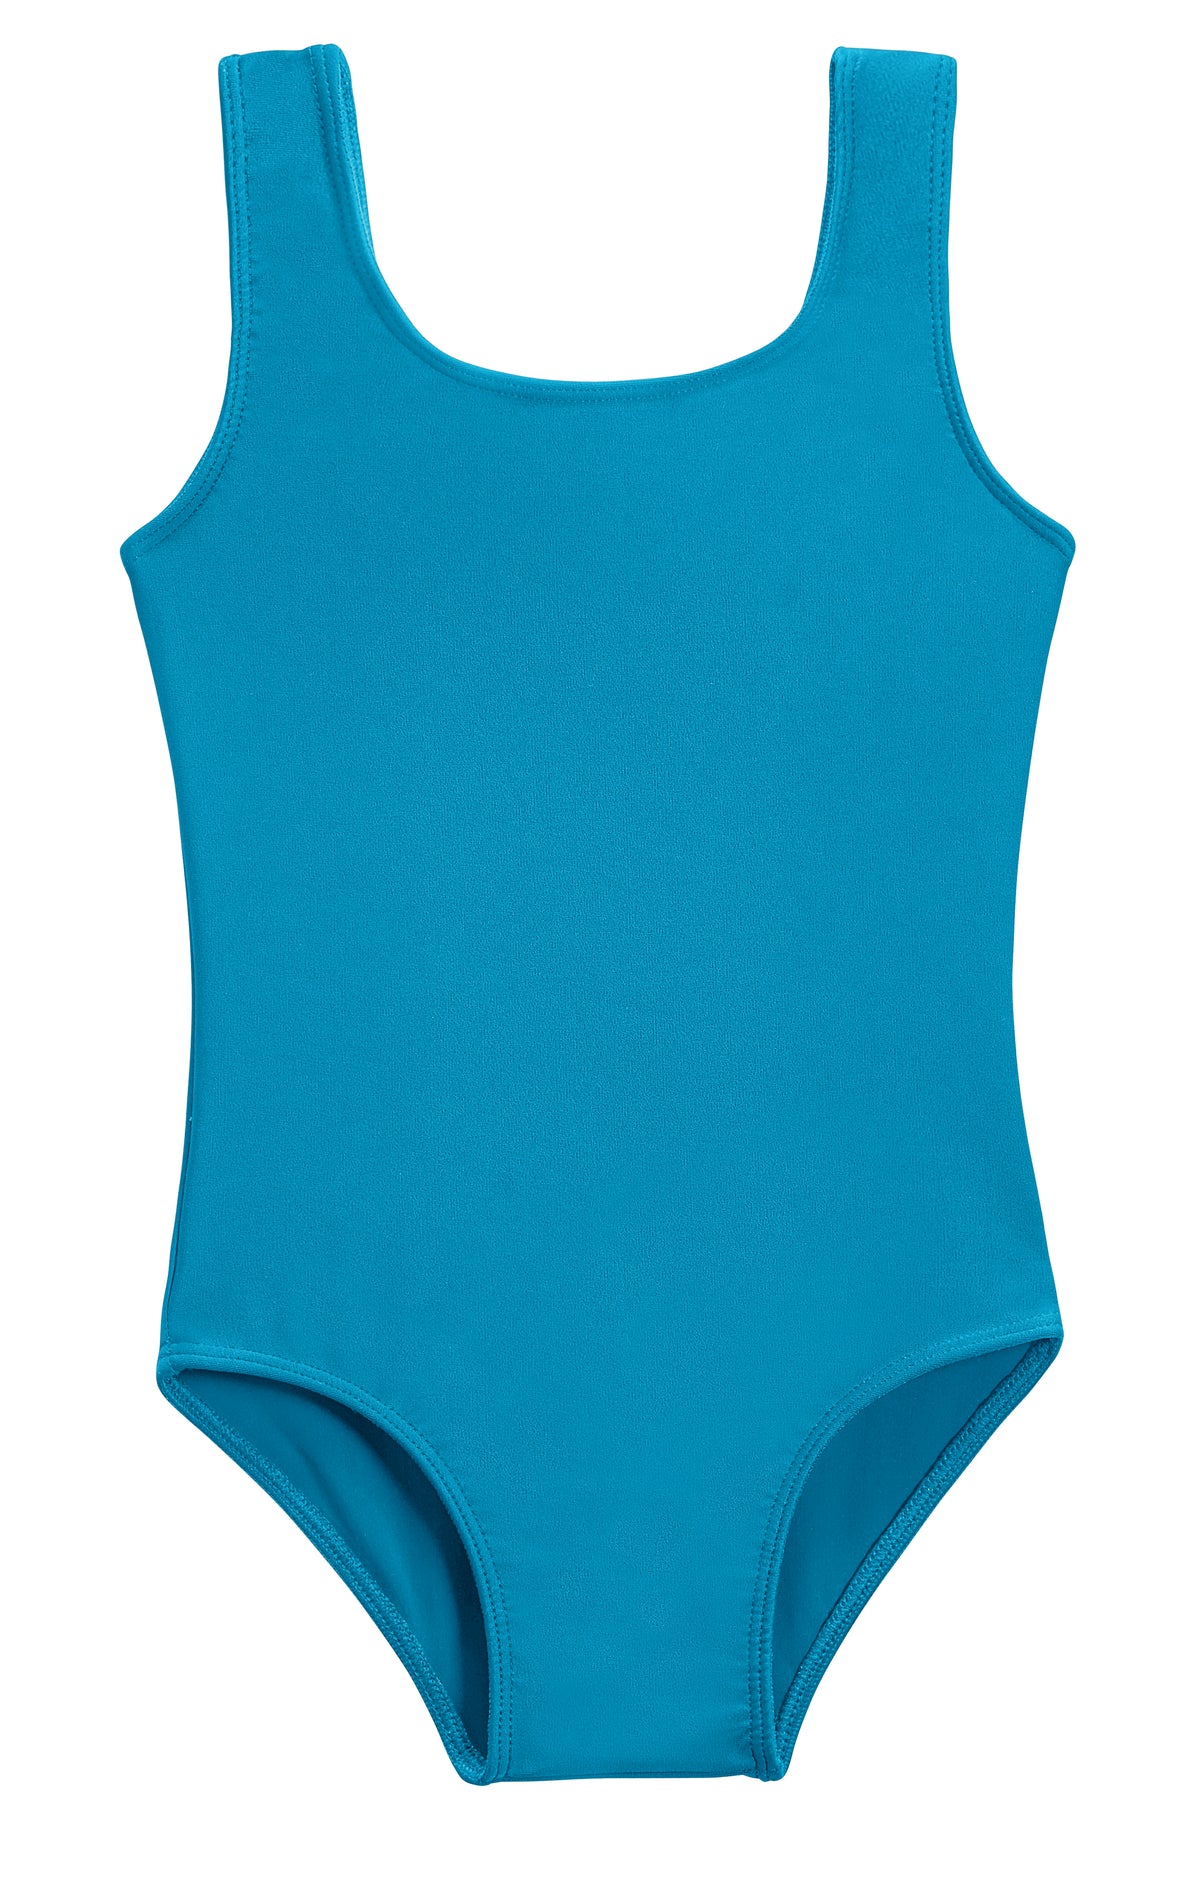 Girls Recycled Nylon UPF 50+ One Piece Swimsuit | Turquoise